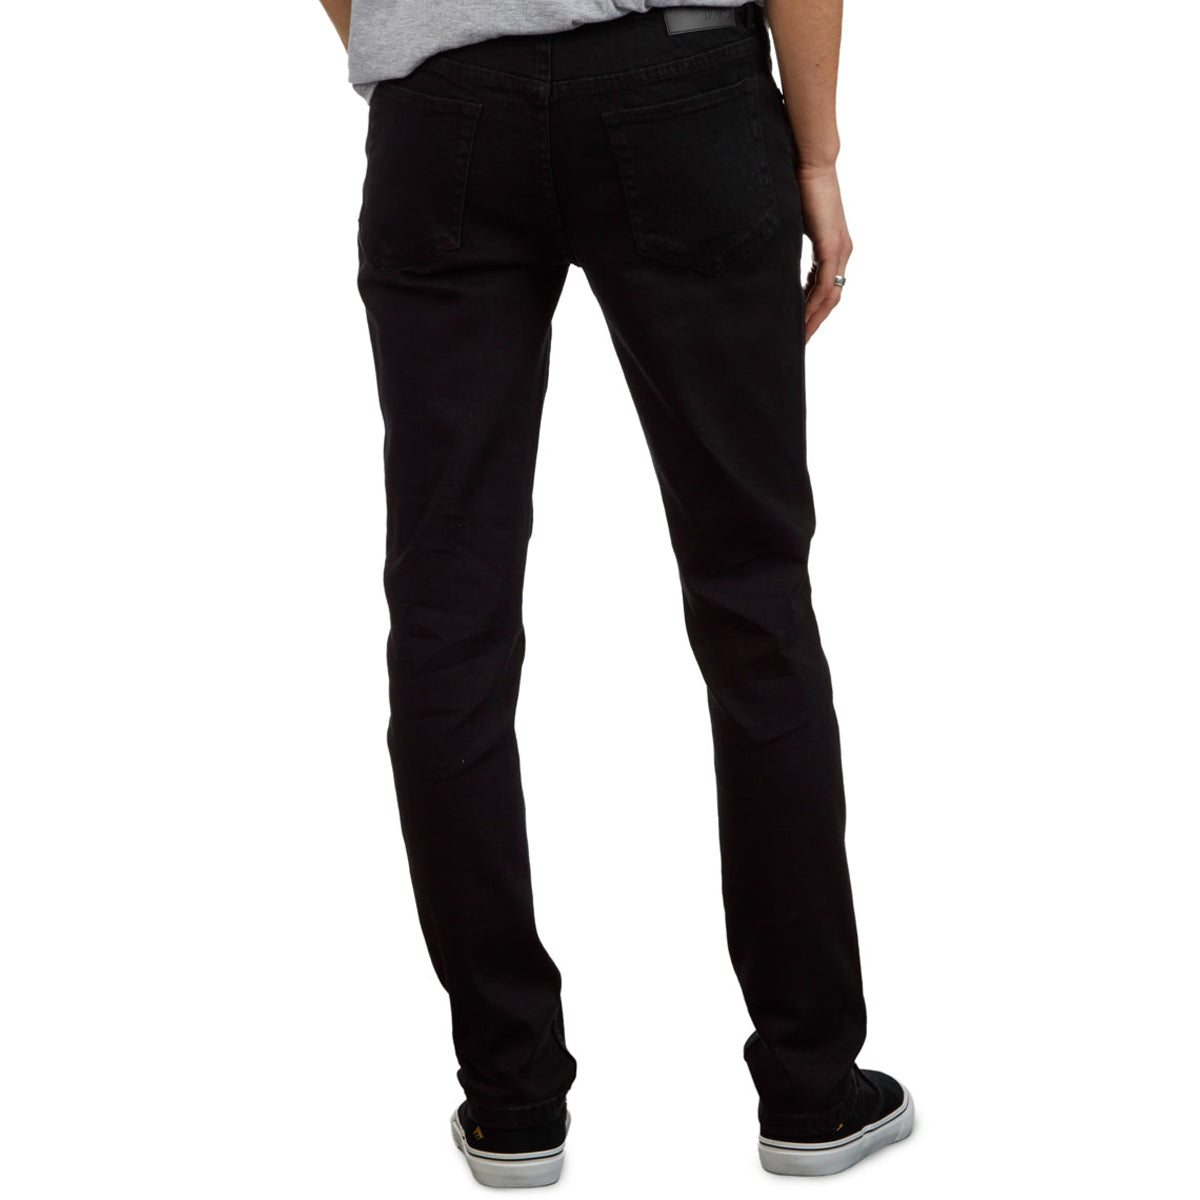 CCS 12oz Stretch Skinny Denim Jeans - 12oz Black image 3